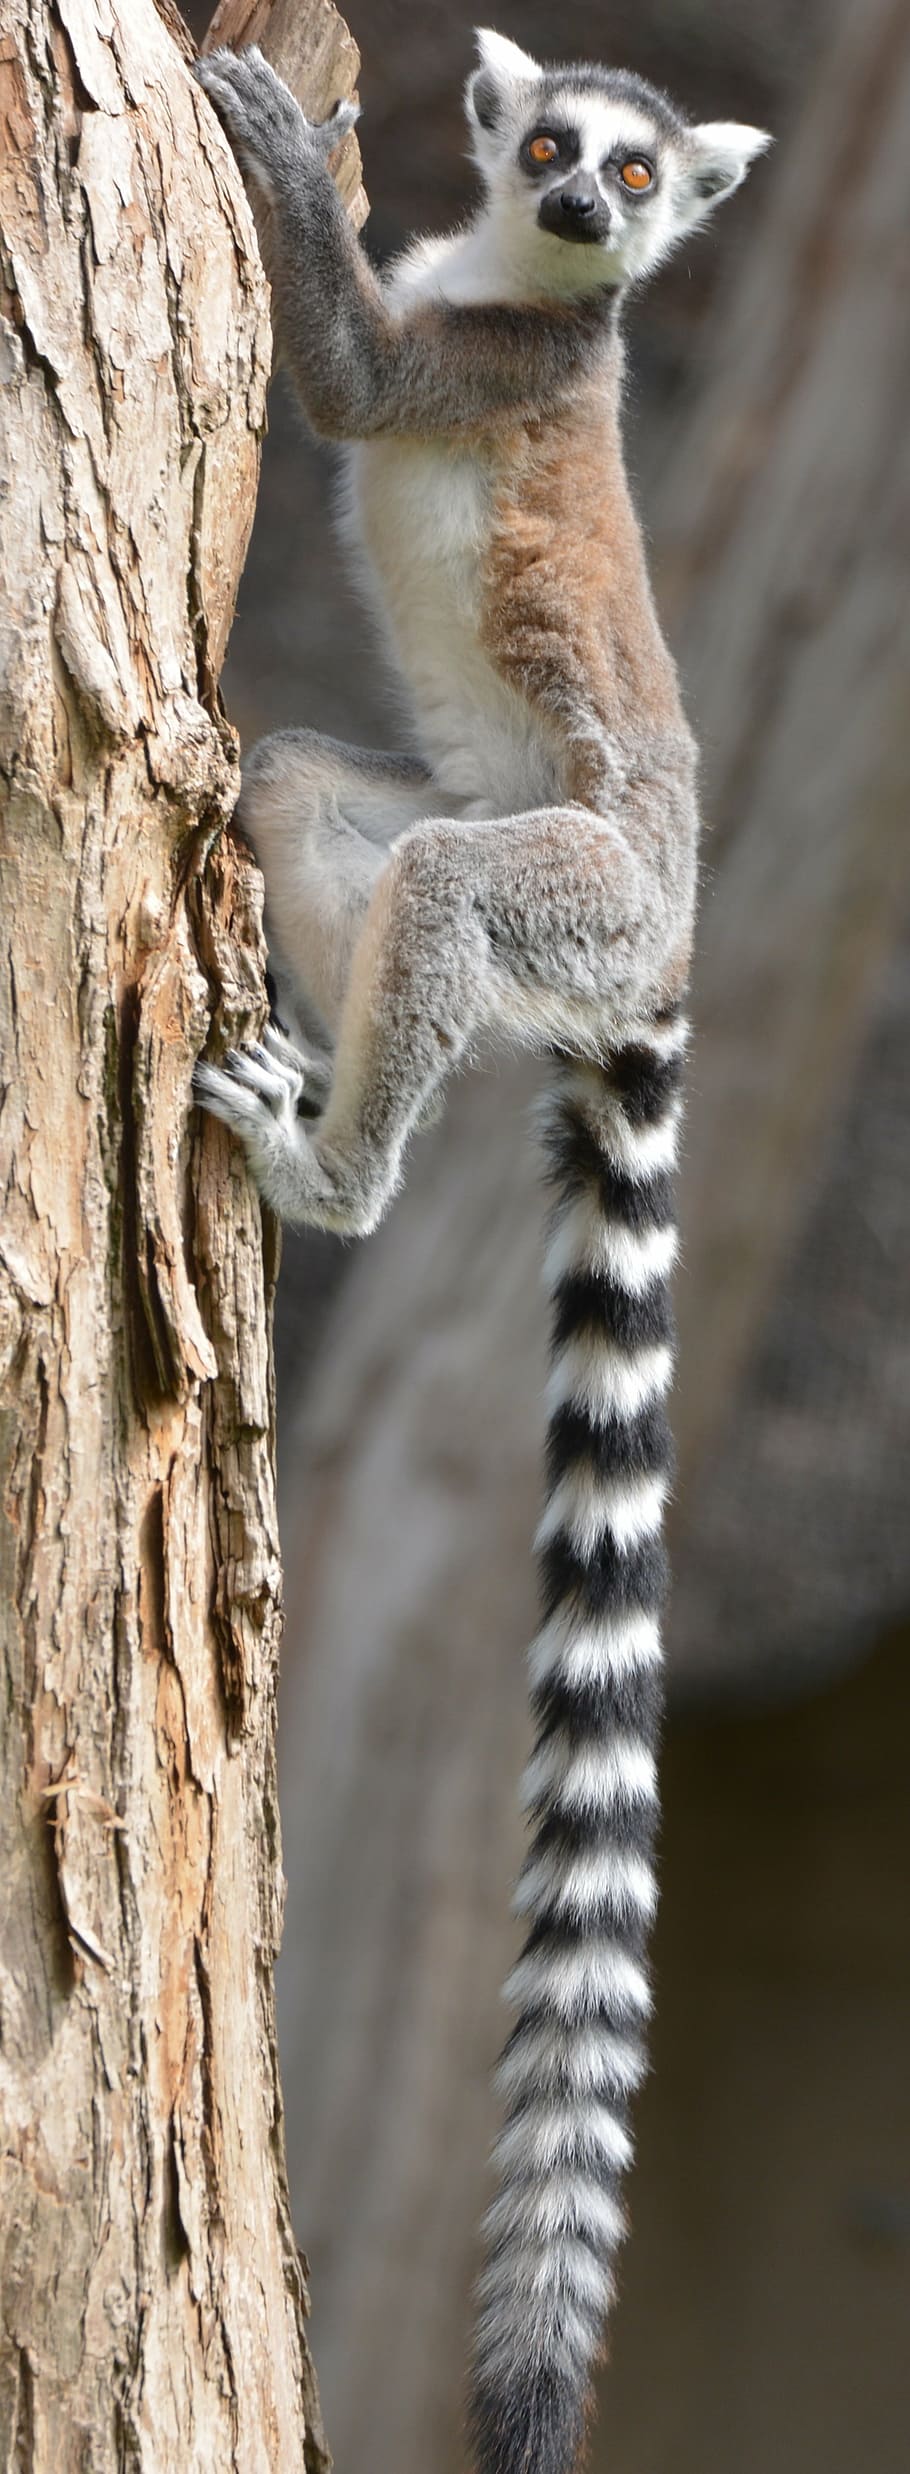 white, brown, ring-tailed lemur, wooden, tree trunk, maki, lemur, monkey, lemurs, animal